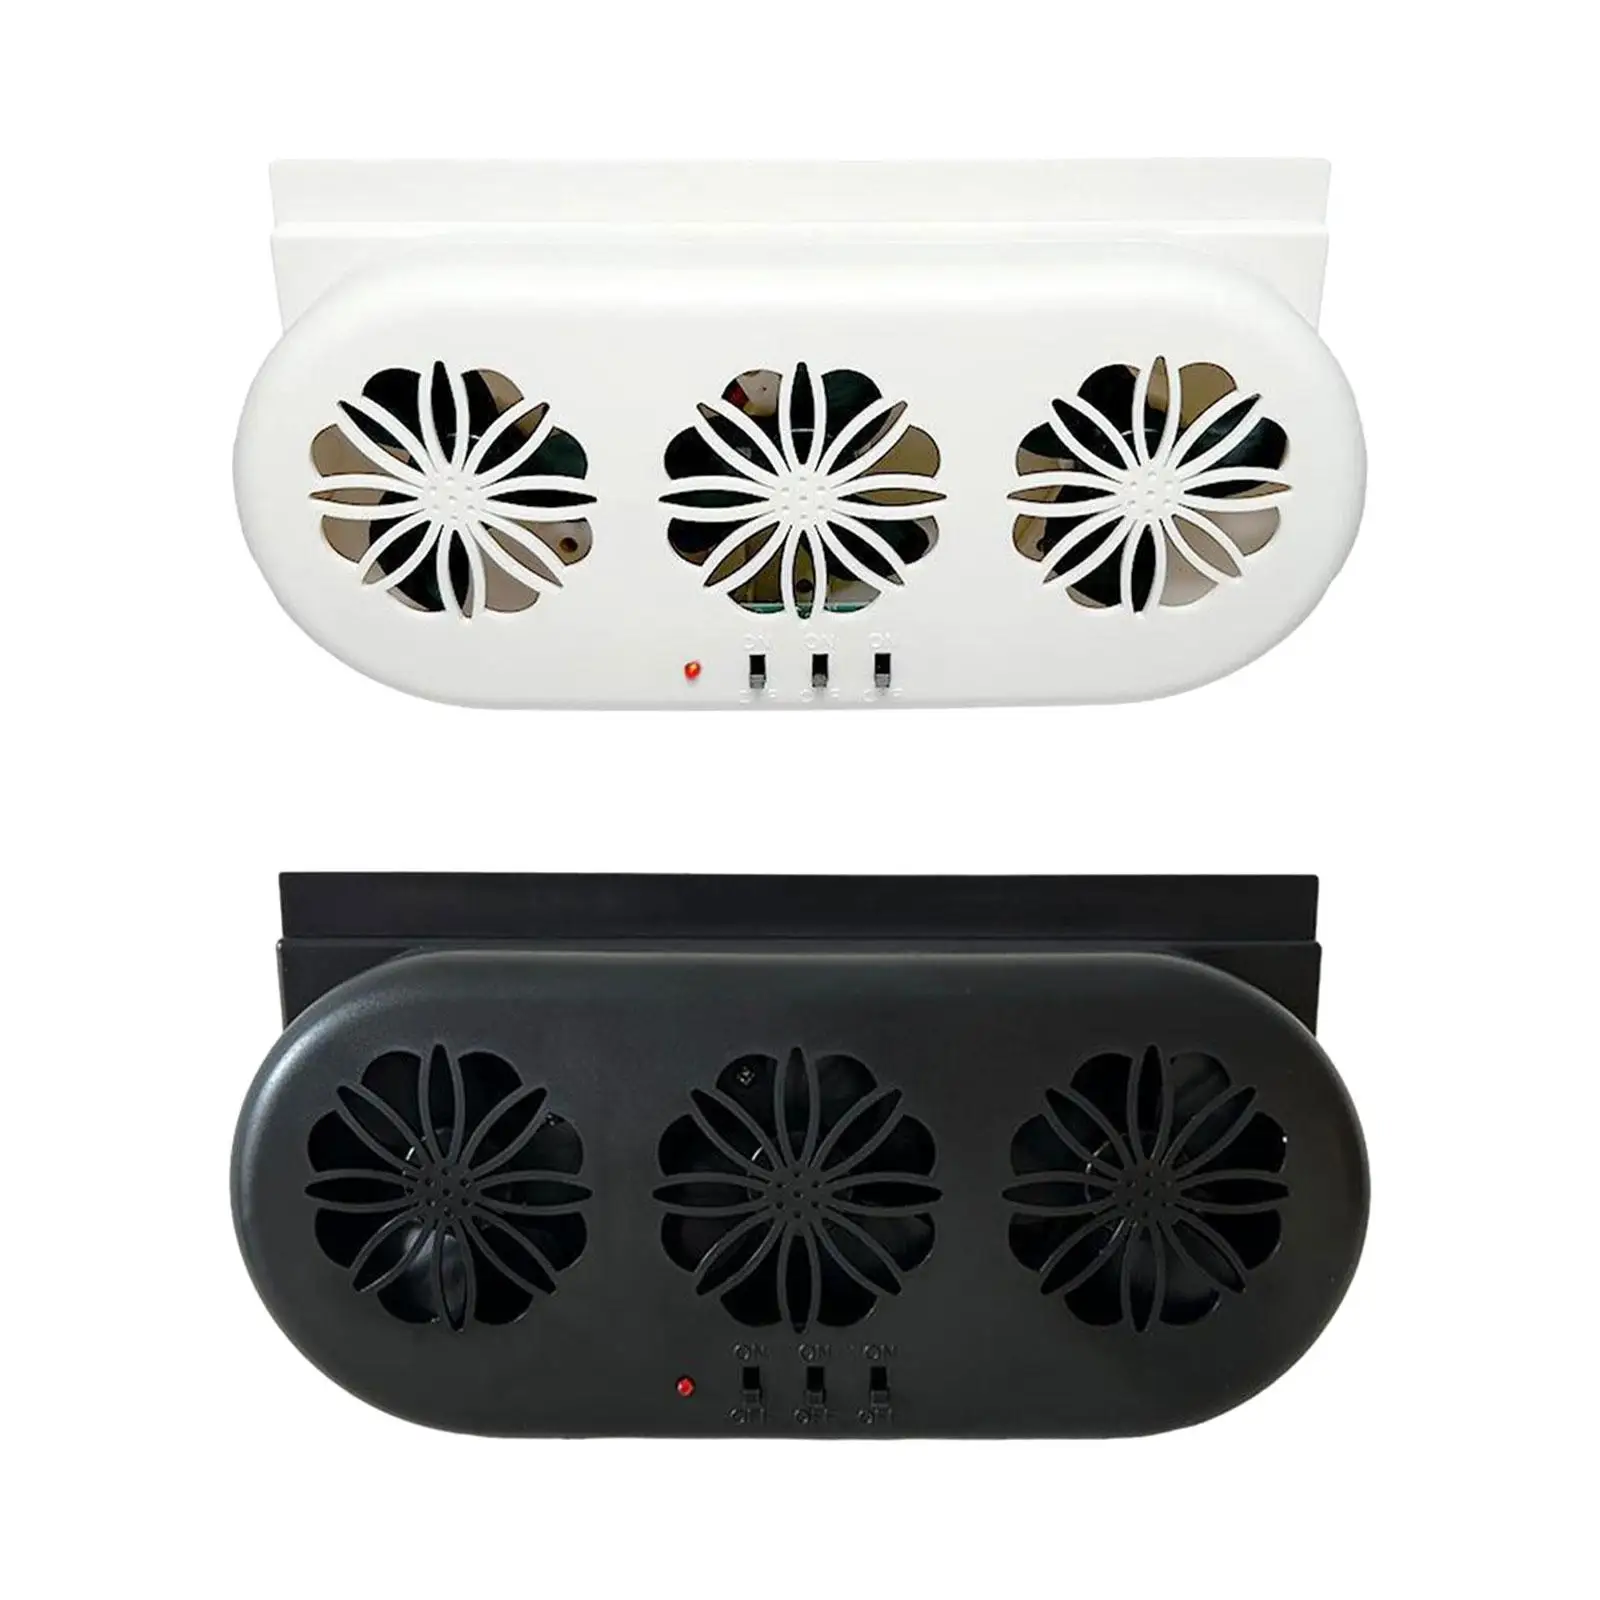 

Car Fan Window Vent USB Universal Easy to Install Auto Ventilation Fan Car Cooling Fan for Automobile Trucks SUV Vehicle